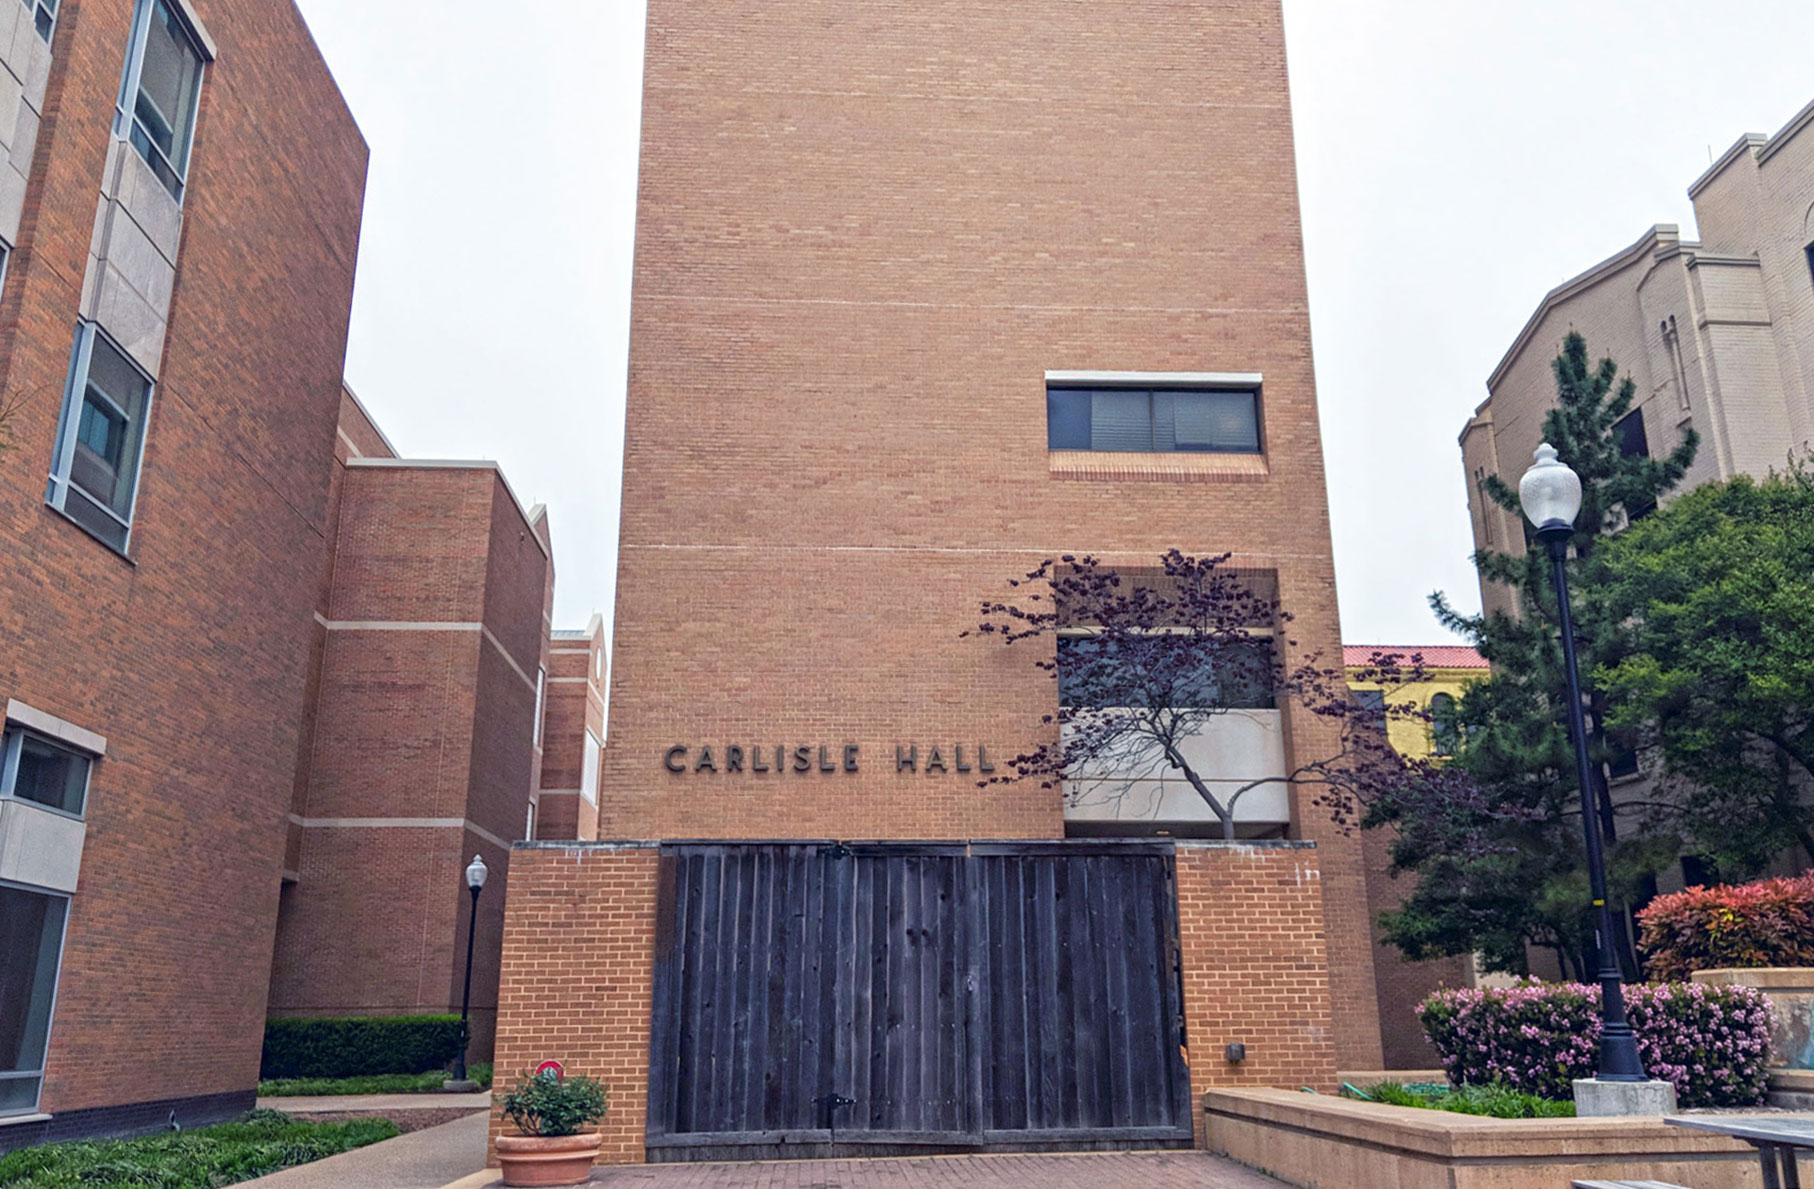 Carlisle Hall